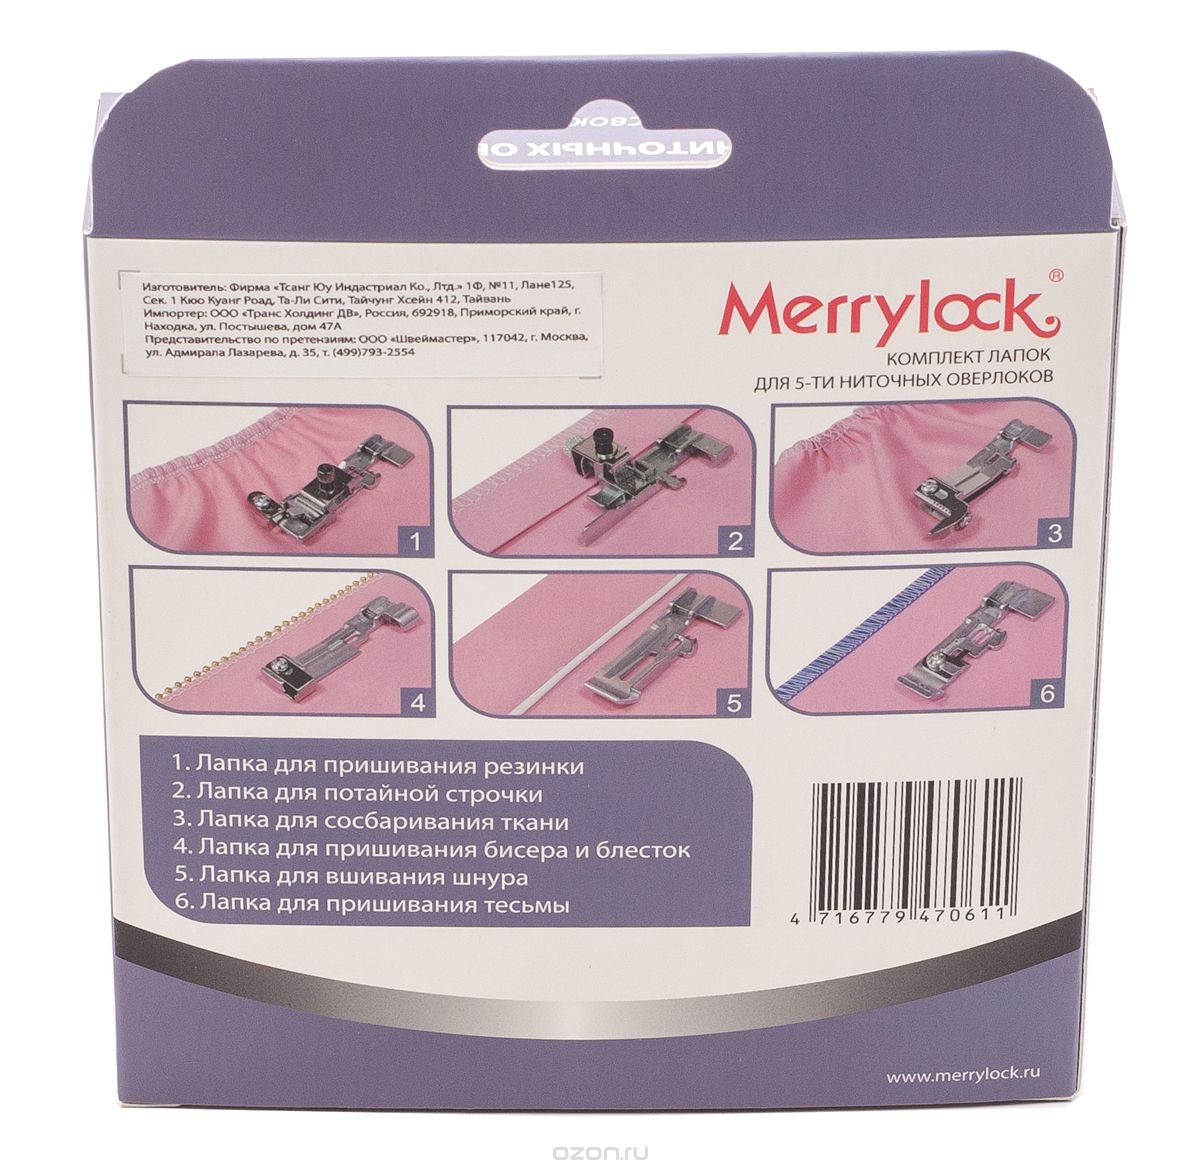 Merrylock    5- 